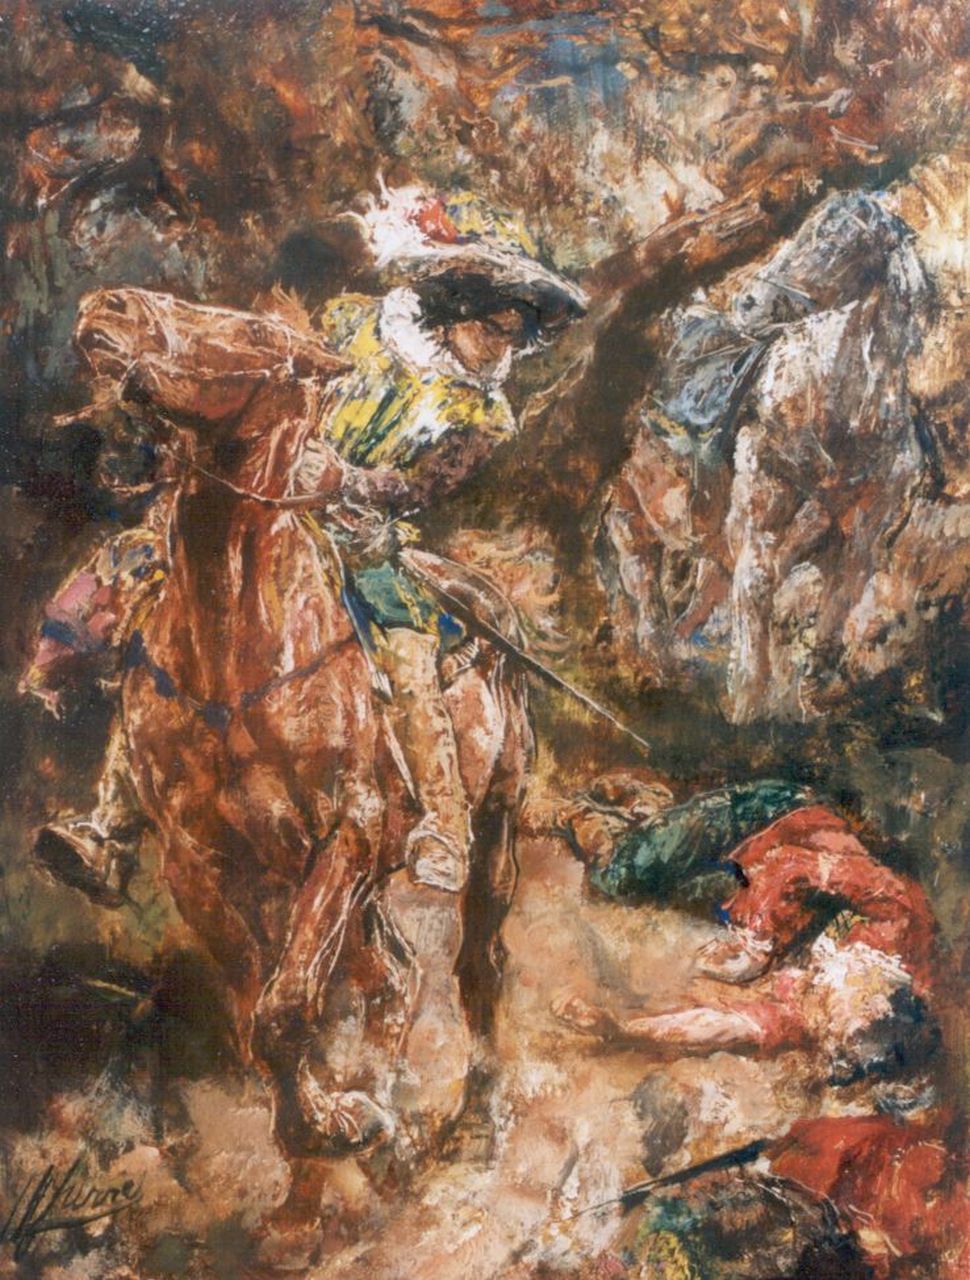 Jurres J.H.  | Johannes Hendricus Jurres, Scène uit Gilblat, olieverf op paneel 28,5 x 21,8 cm, gesigneerd linksonder